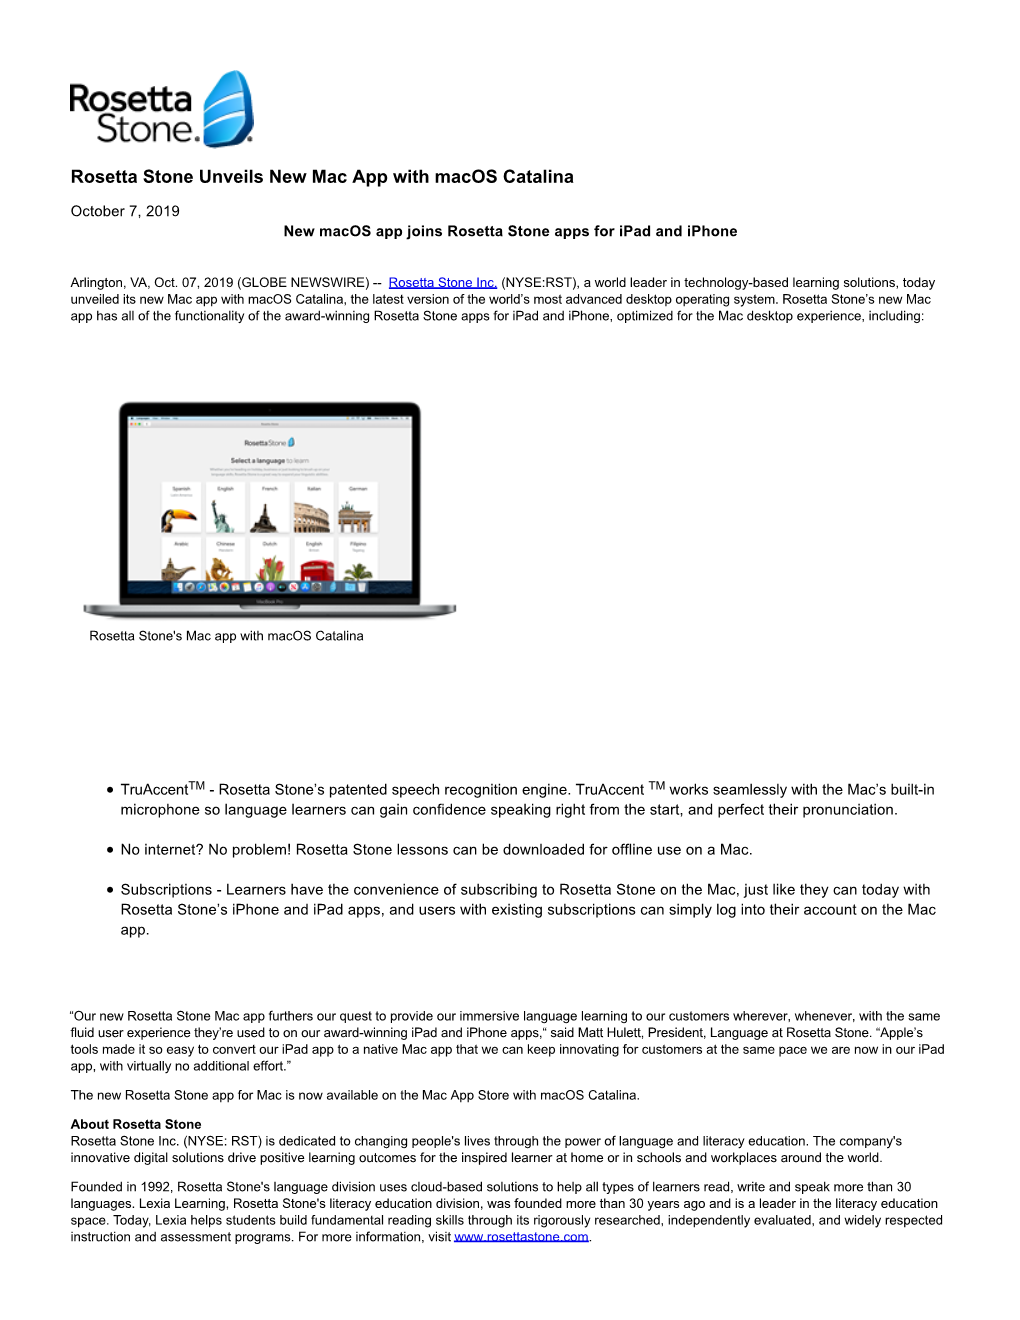 Rosetta Stone Unveils New Mac App with Macos Catalina